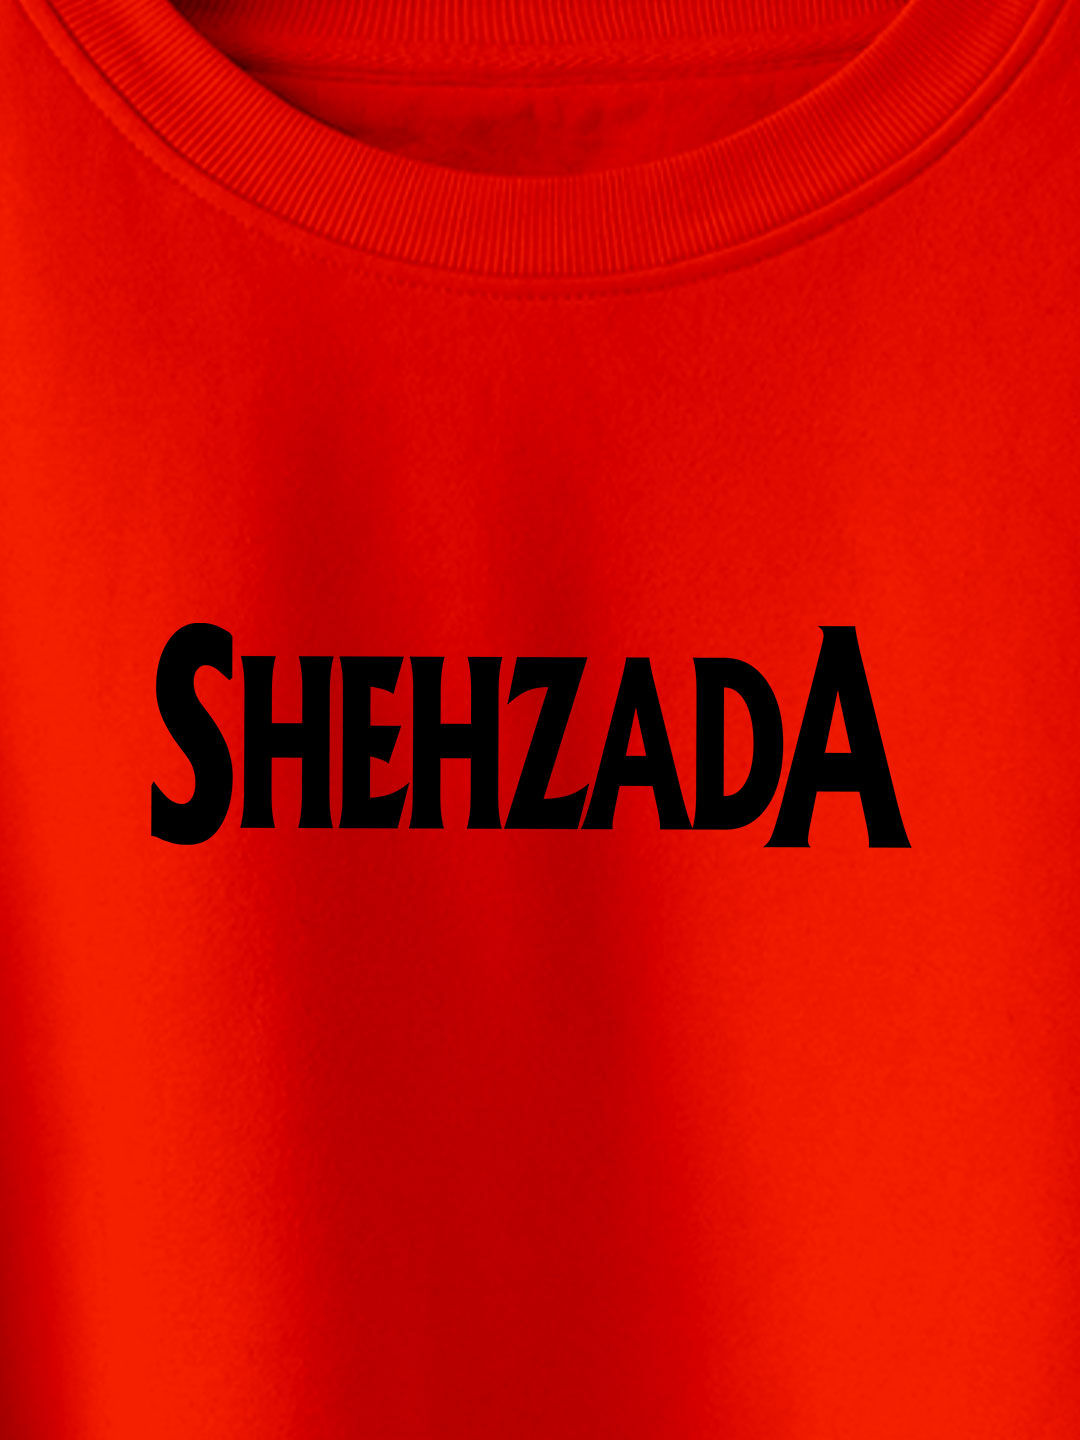 Shehzada Black - Mens Designer Sweatshirt